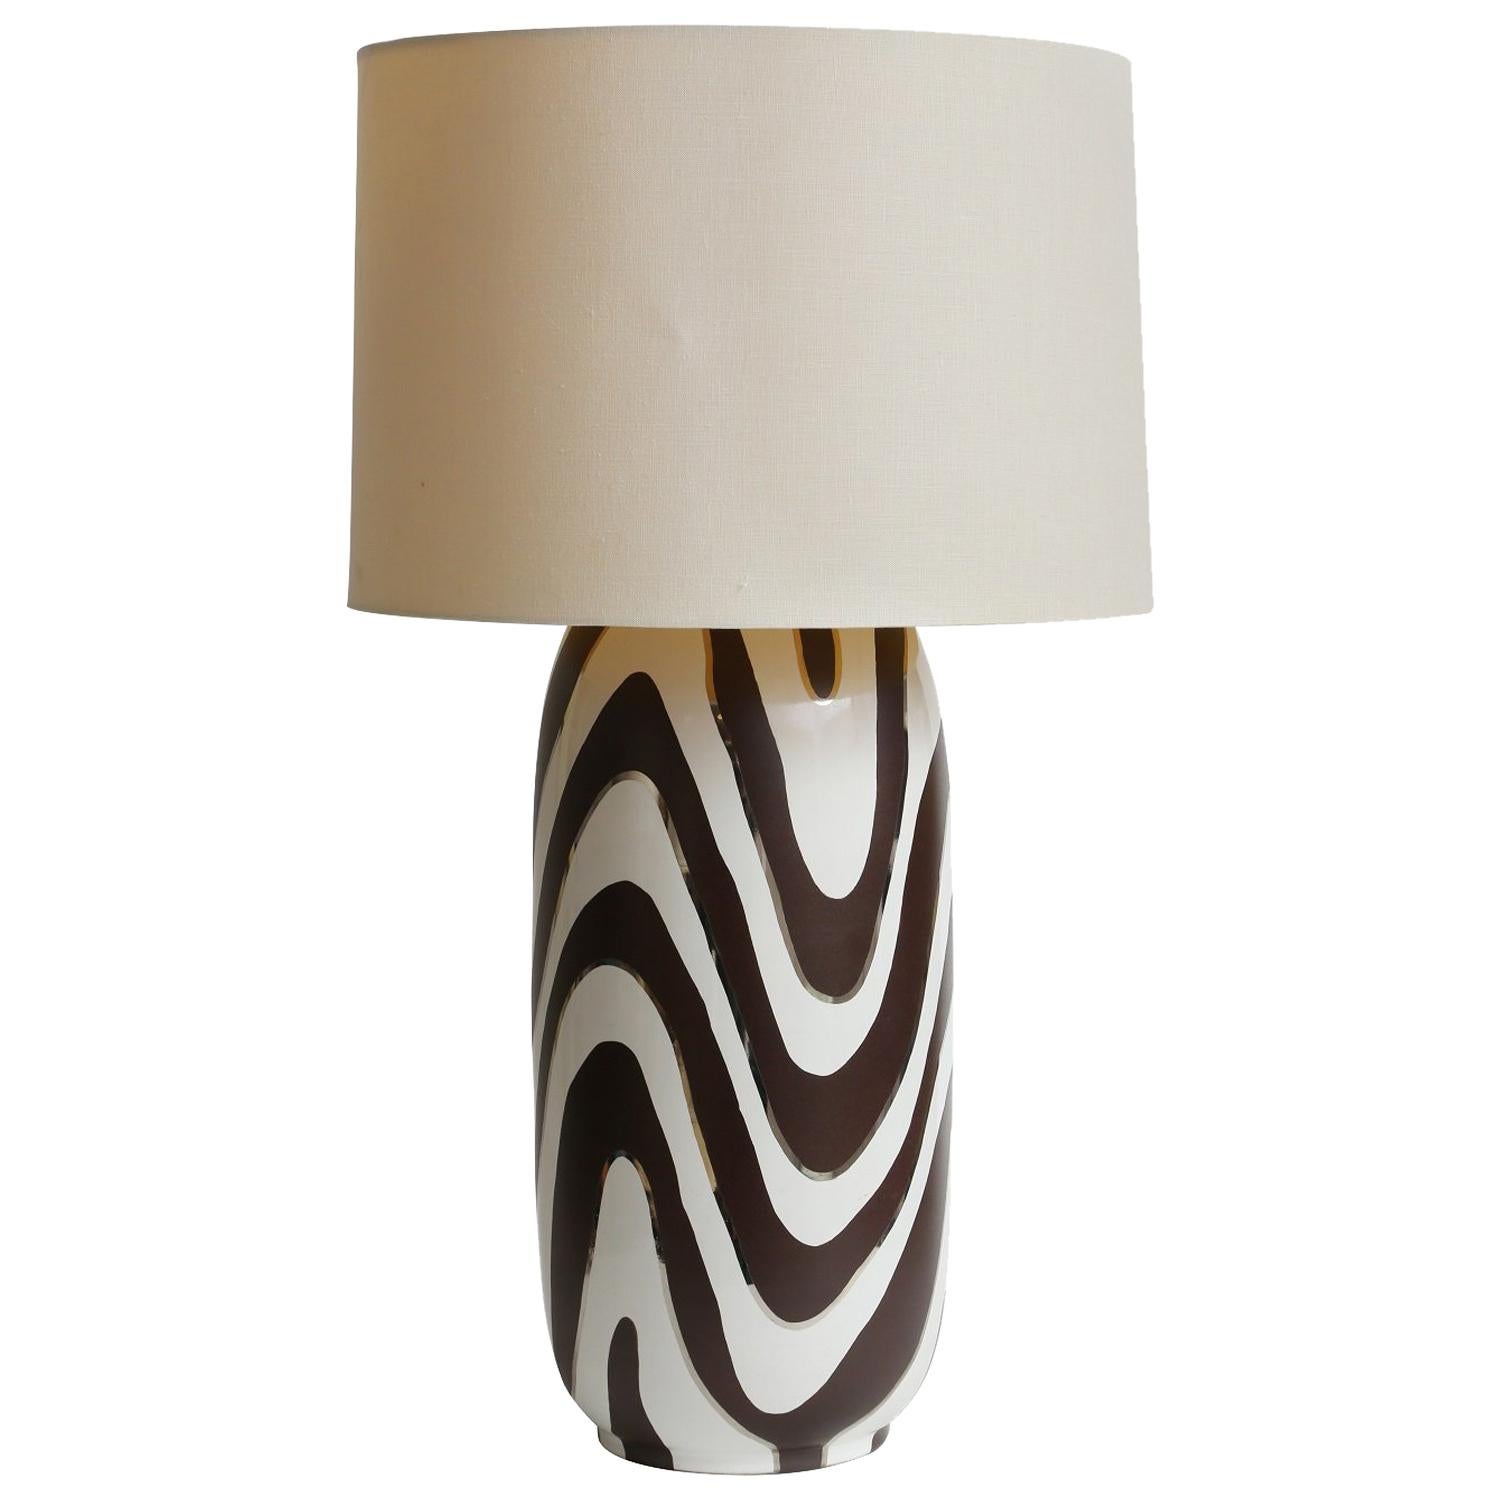 Waylande Gregory Zebra Table Lamp For, Zebra Table Lamp